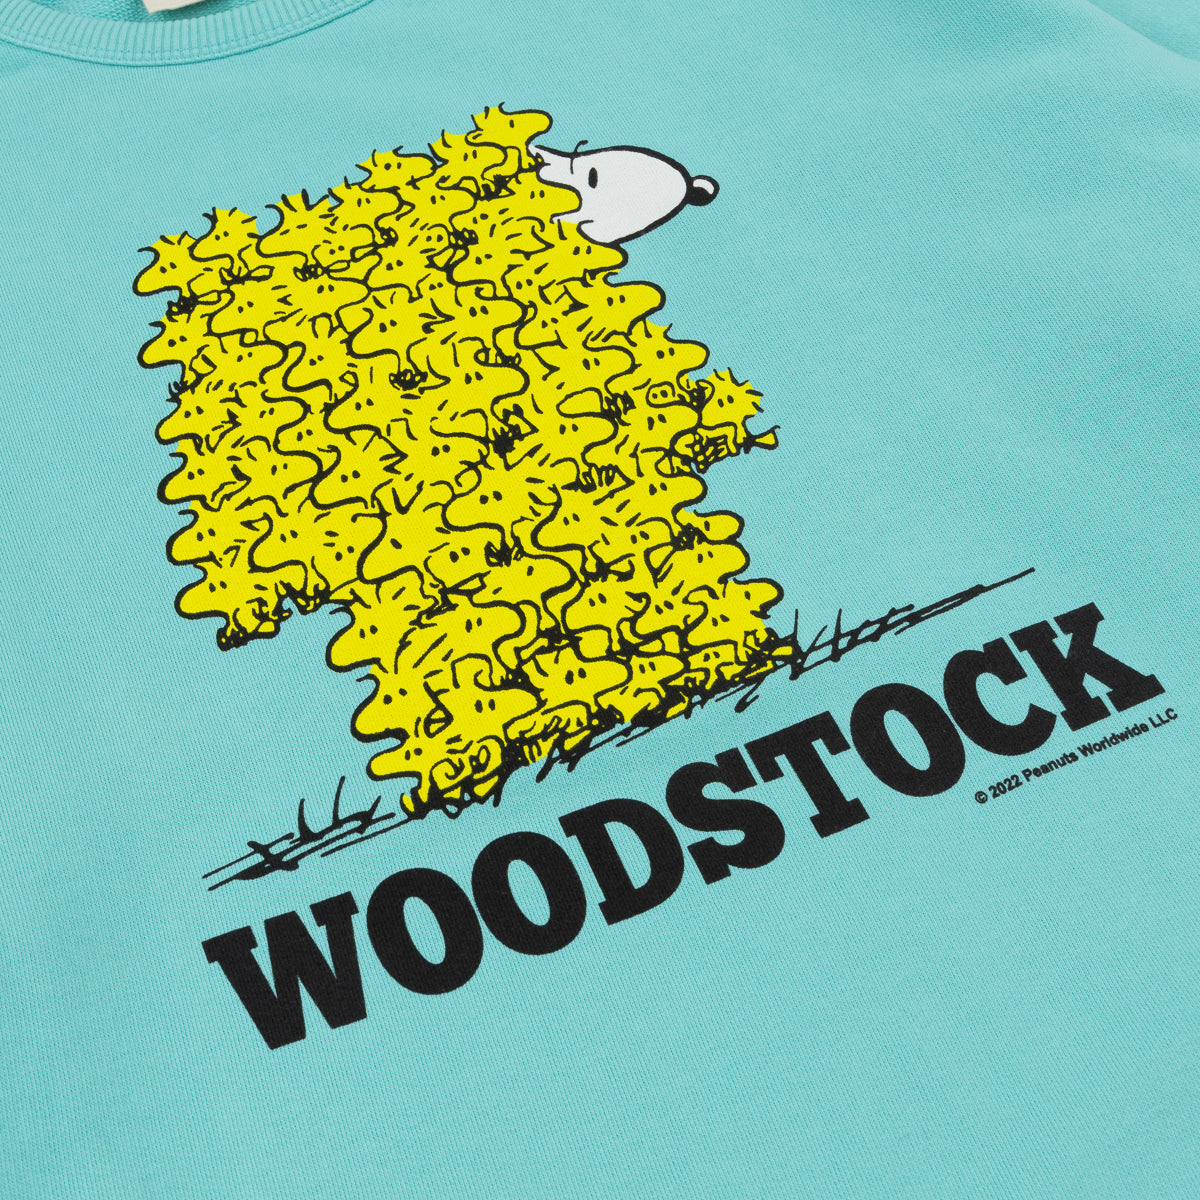 Woodstock Sweatshirt